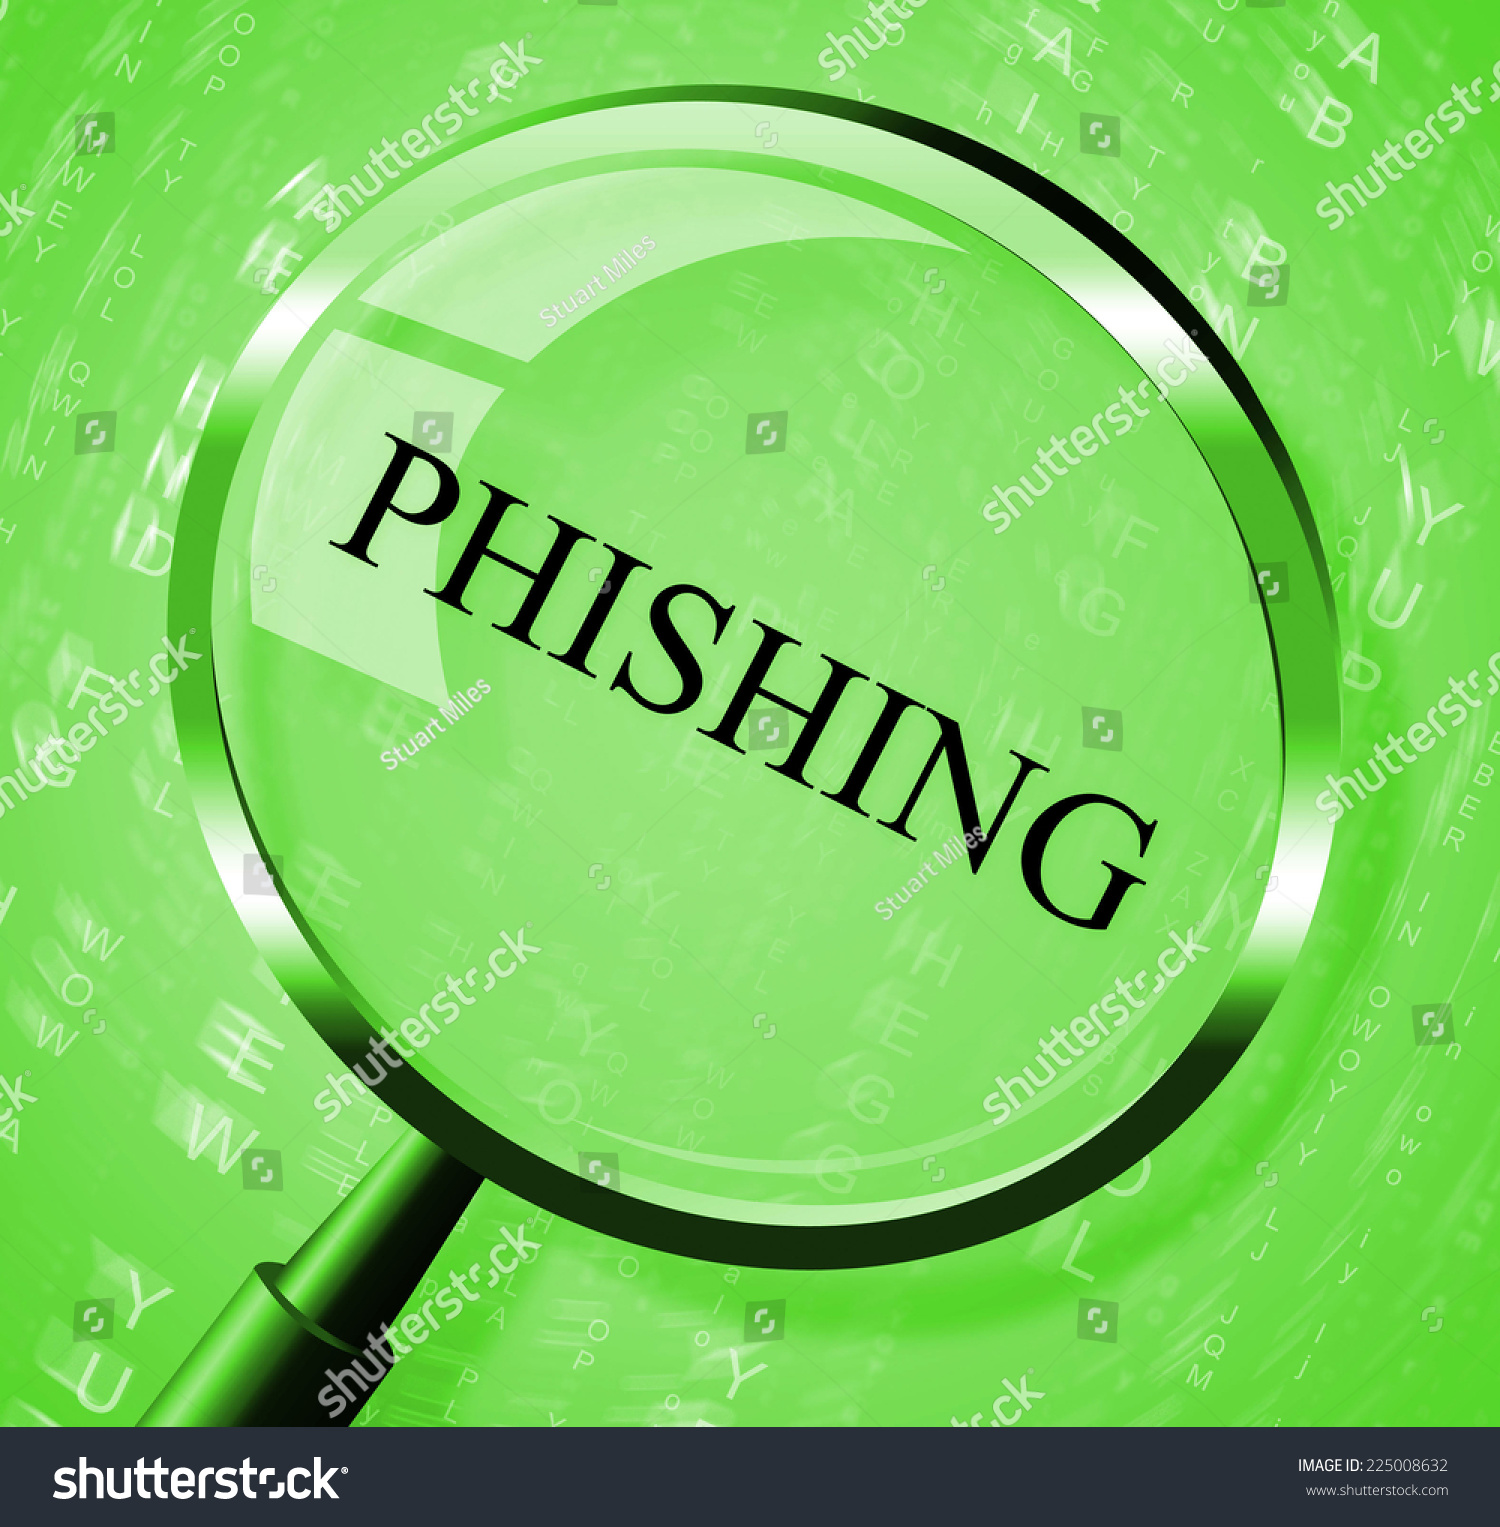 Phishing meaning